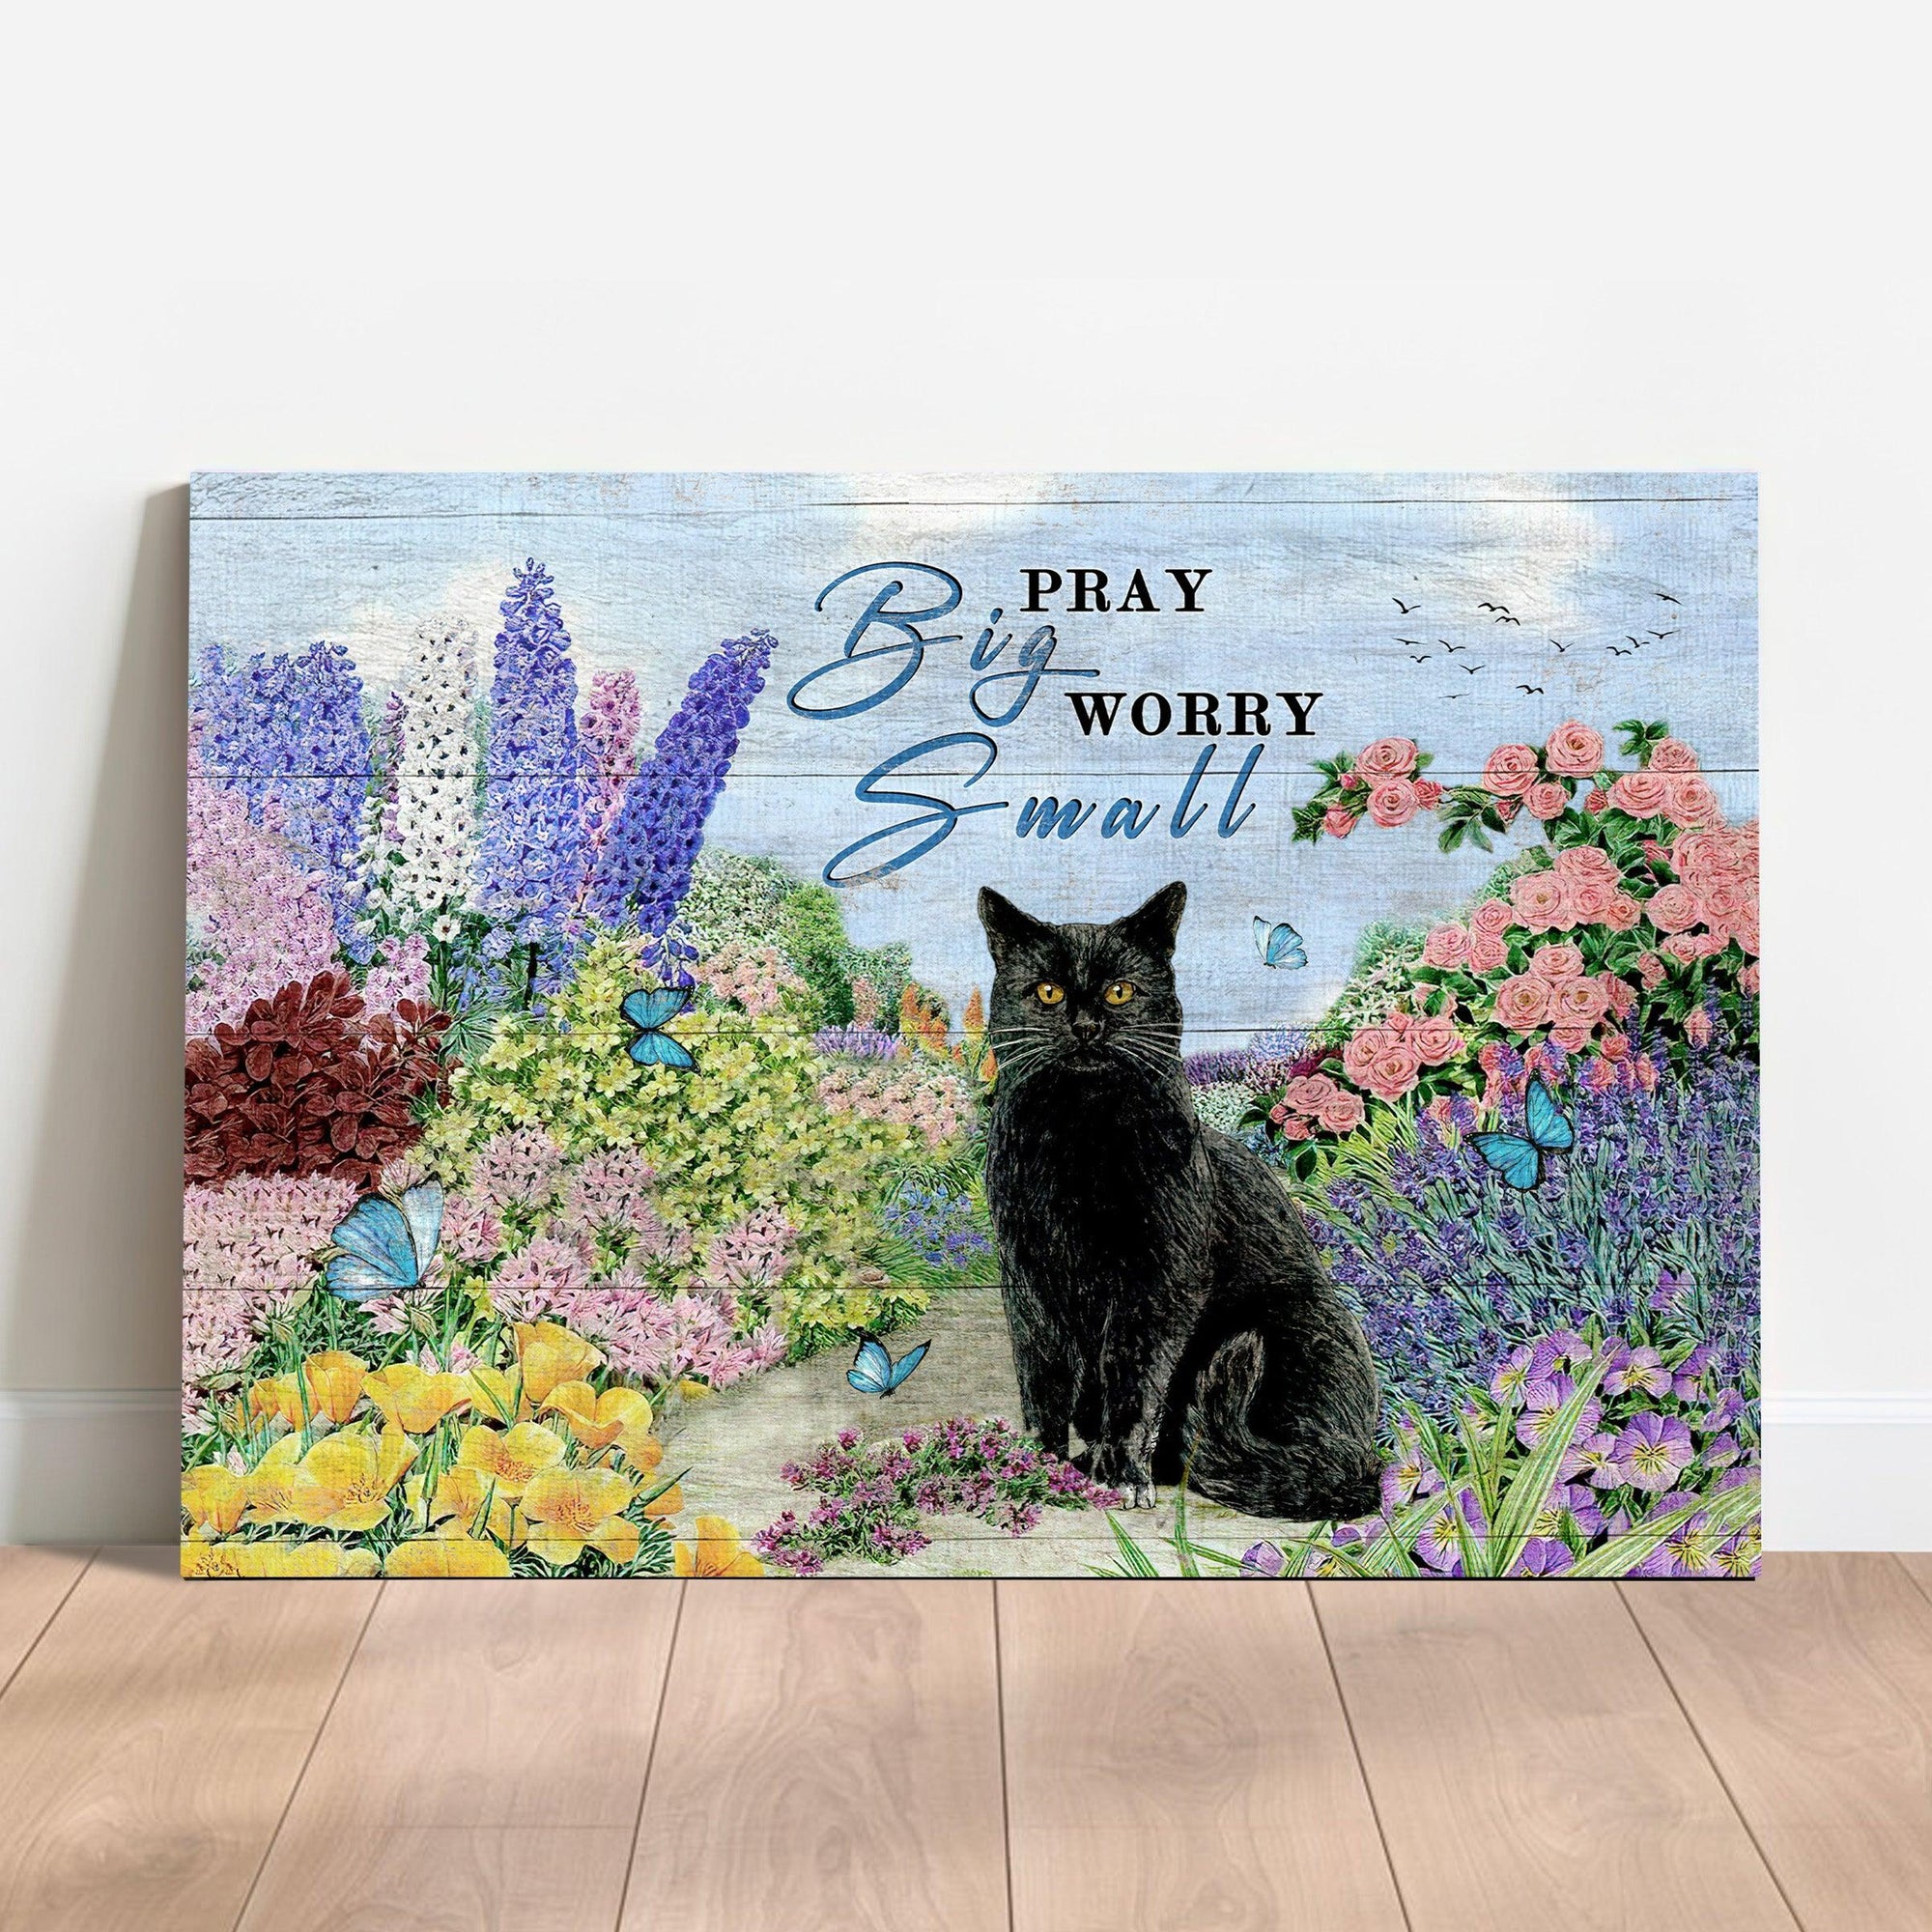 Black Cat & Jesus Premium Wrapped Landscape Canvas - Black Cat, Flower Garden, Blue Butterfly, Pray Big, Worry Small - Gift For Black Cat Lovers - Amzanimalsgift